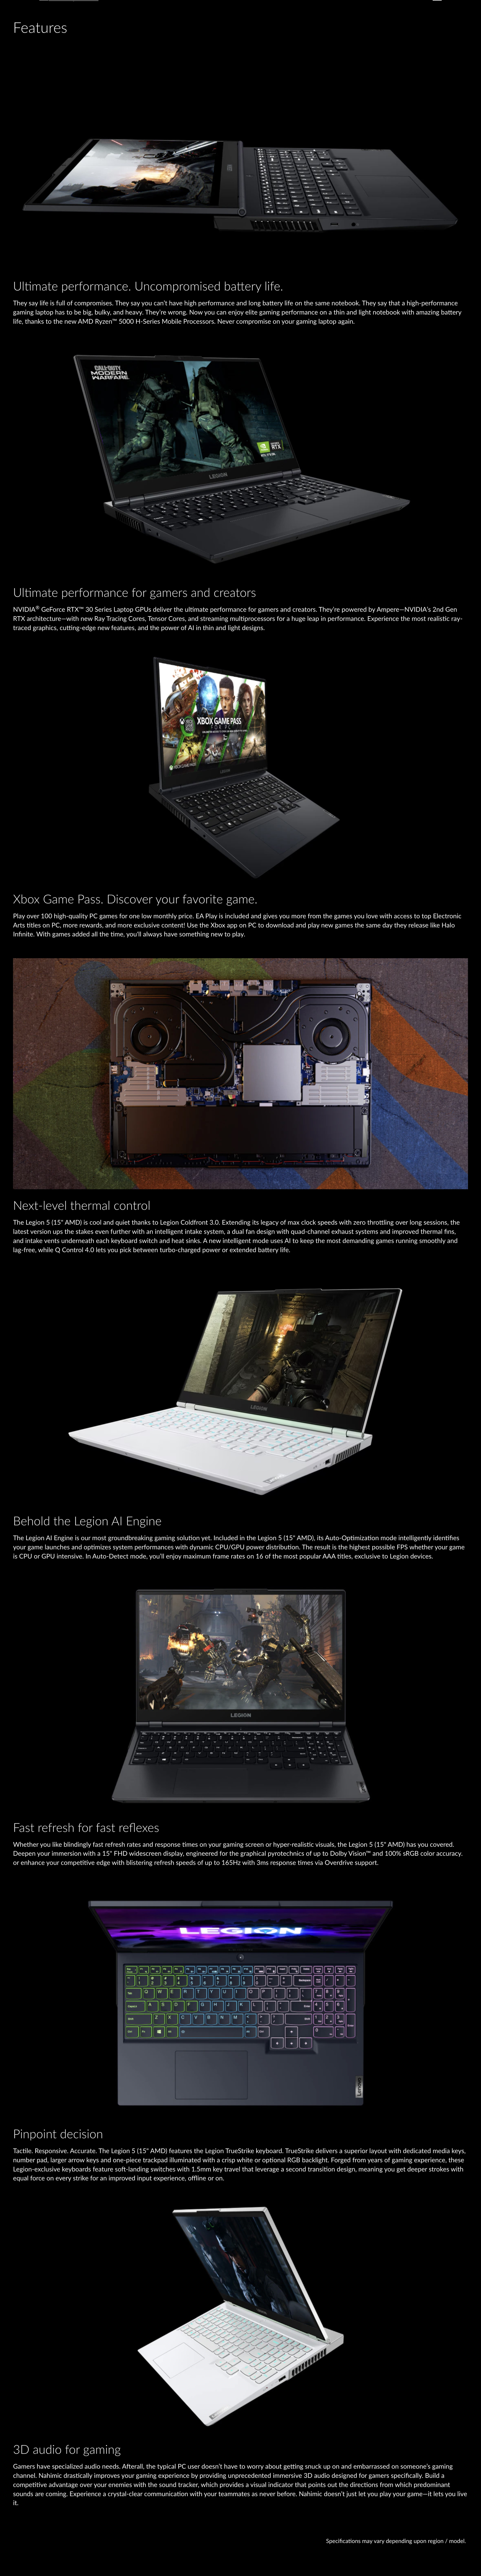 Legion-5-15ACH6-Gaming-Laptop-Description